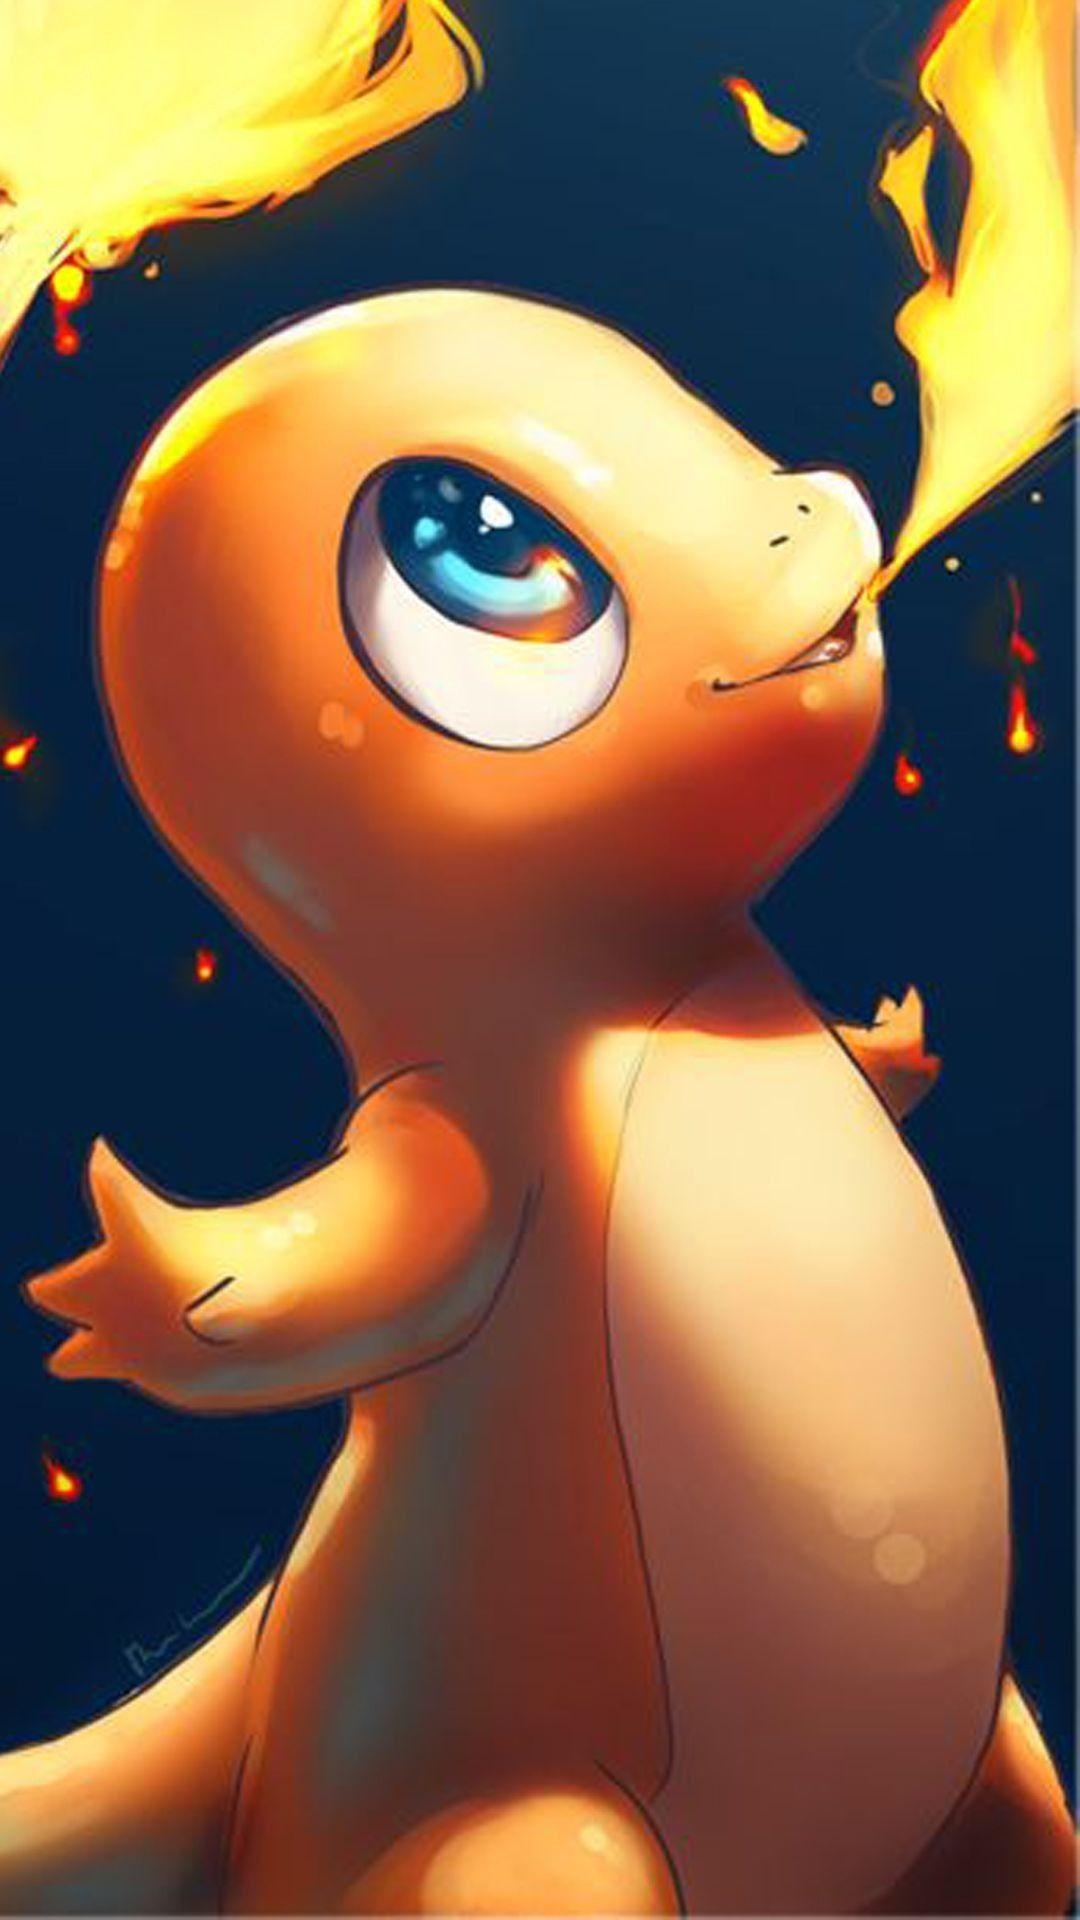 Cute pokemon pikachu and pokemon anime 528081 on animeshercom